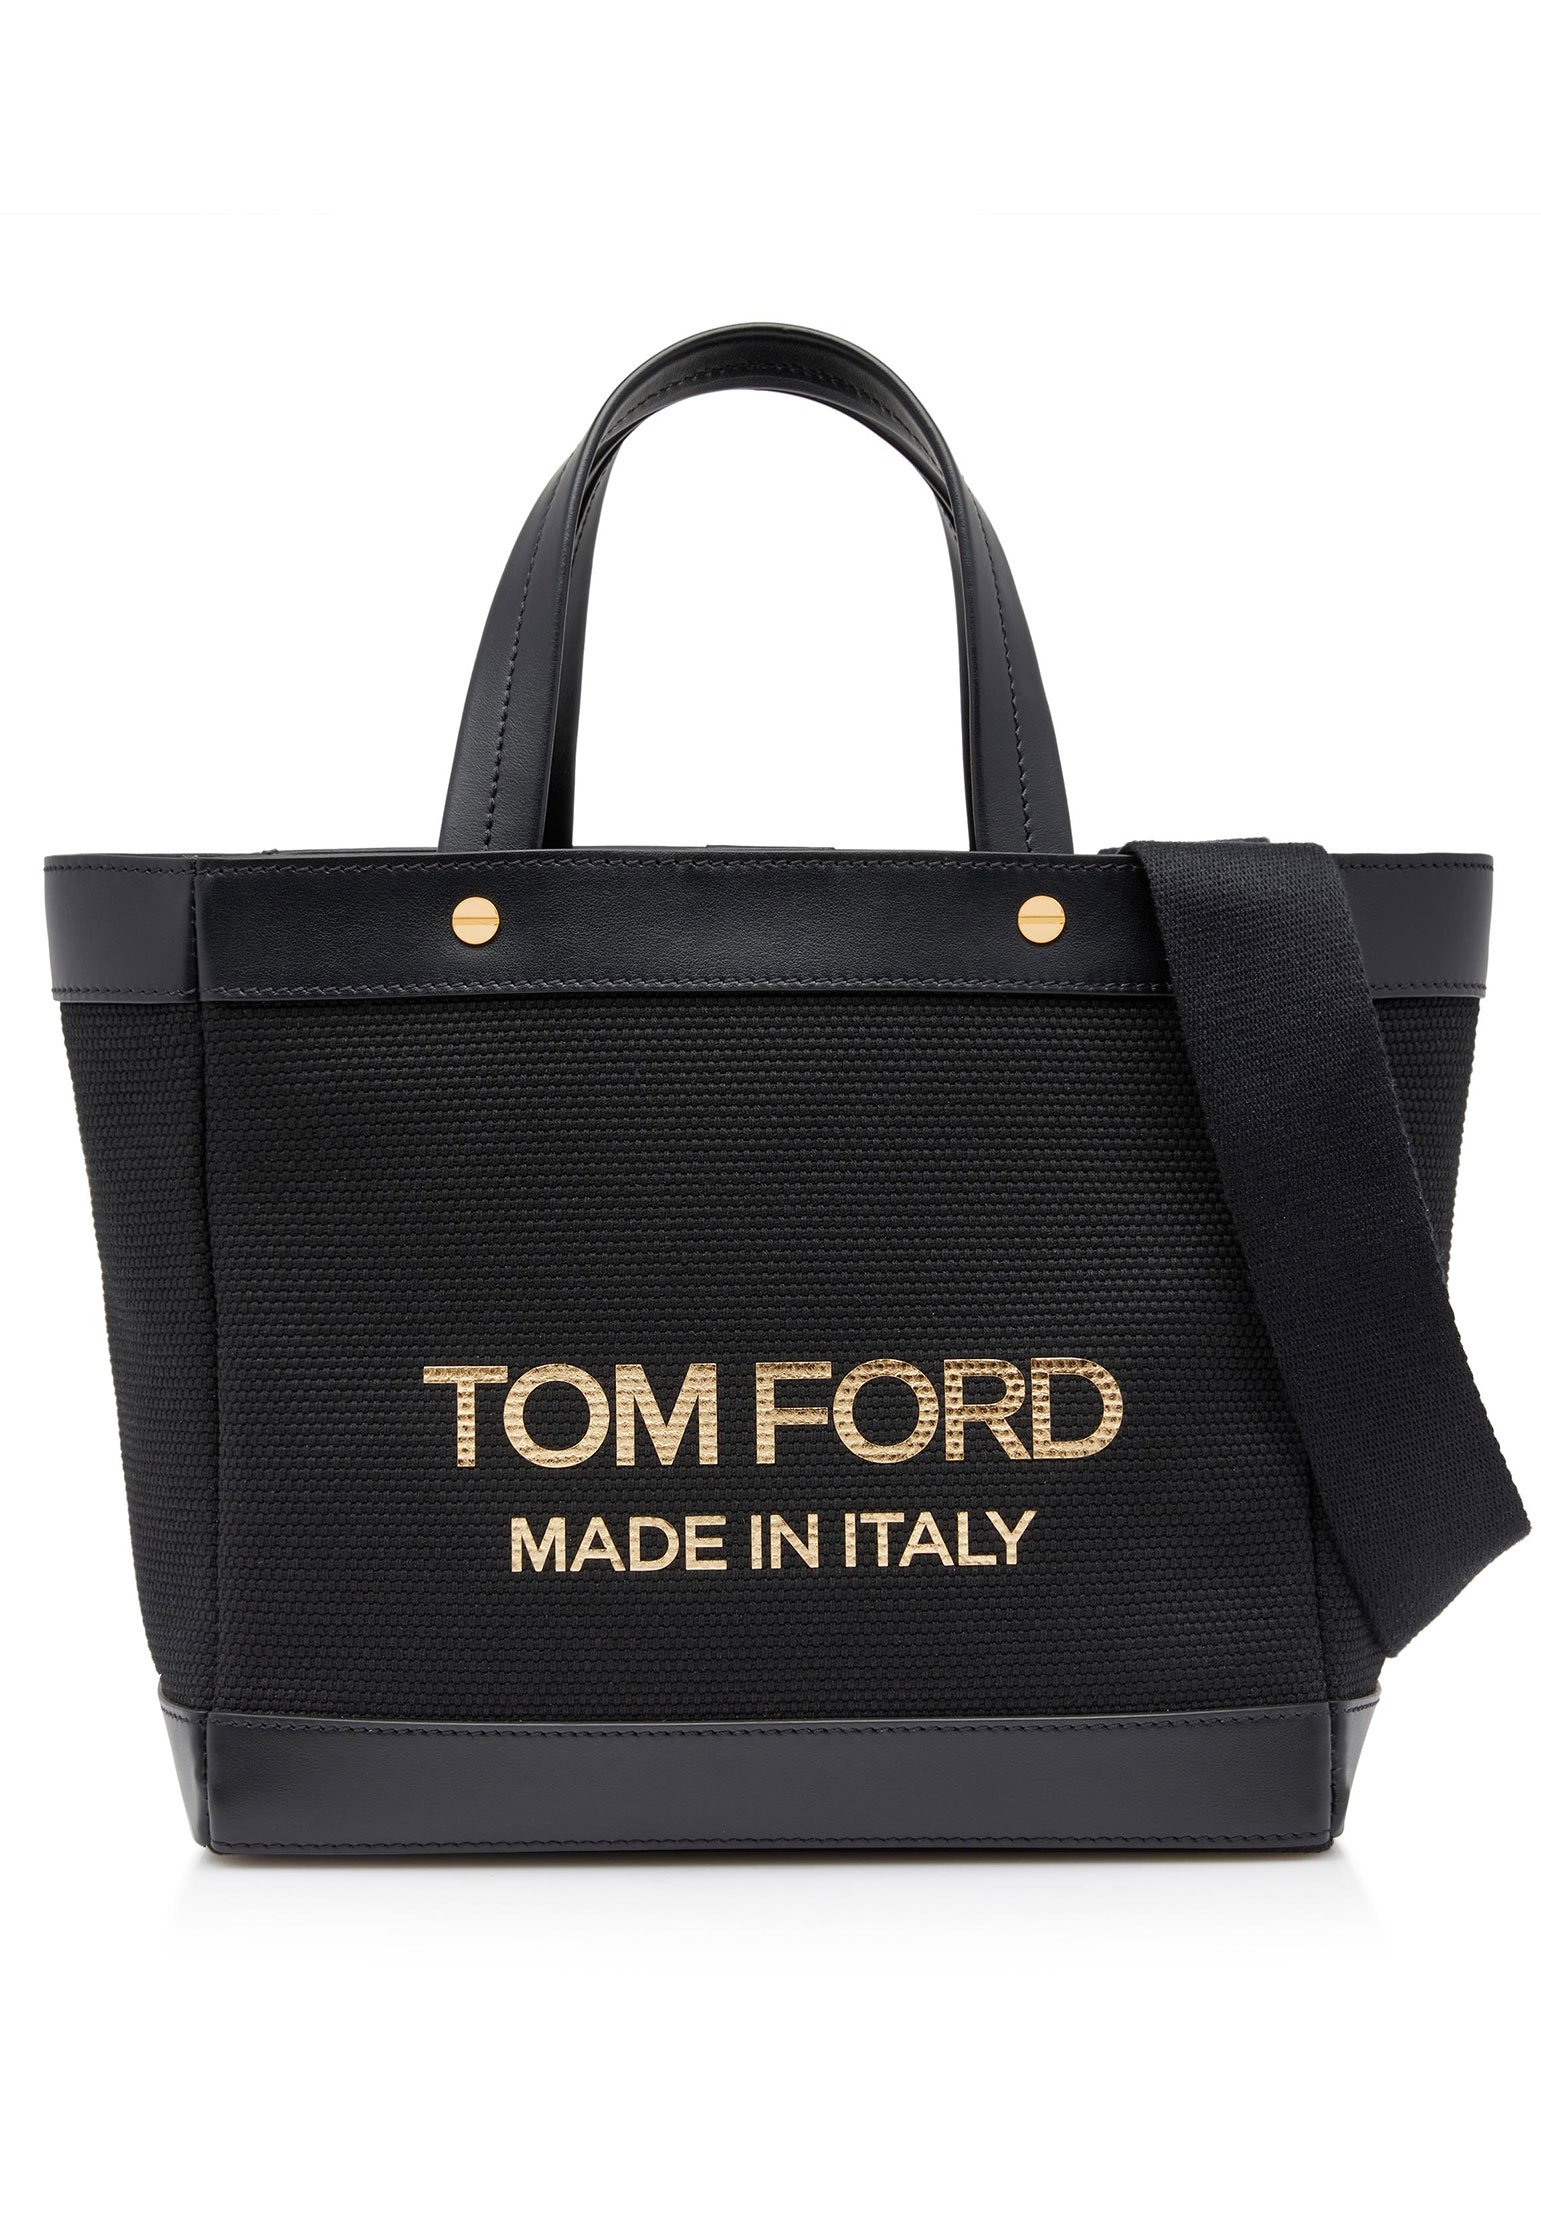 Tote bag TOM FORD Color: black (Code: 1092) in online store Allure